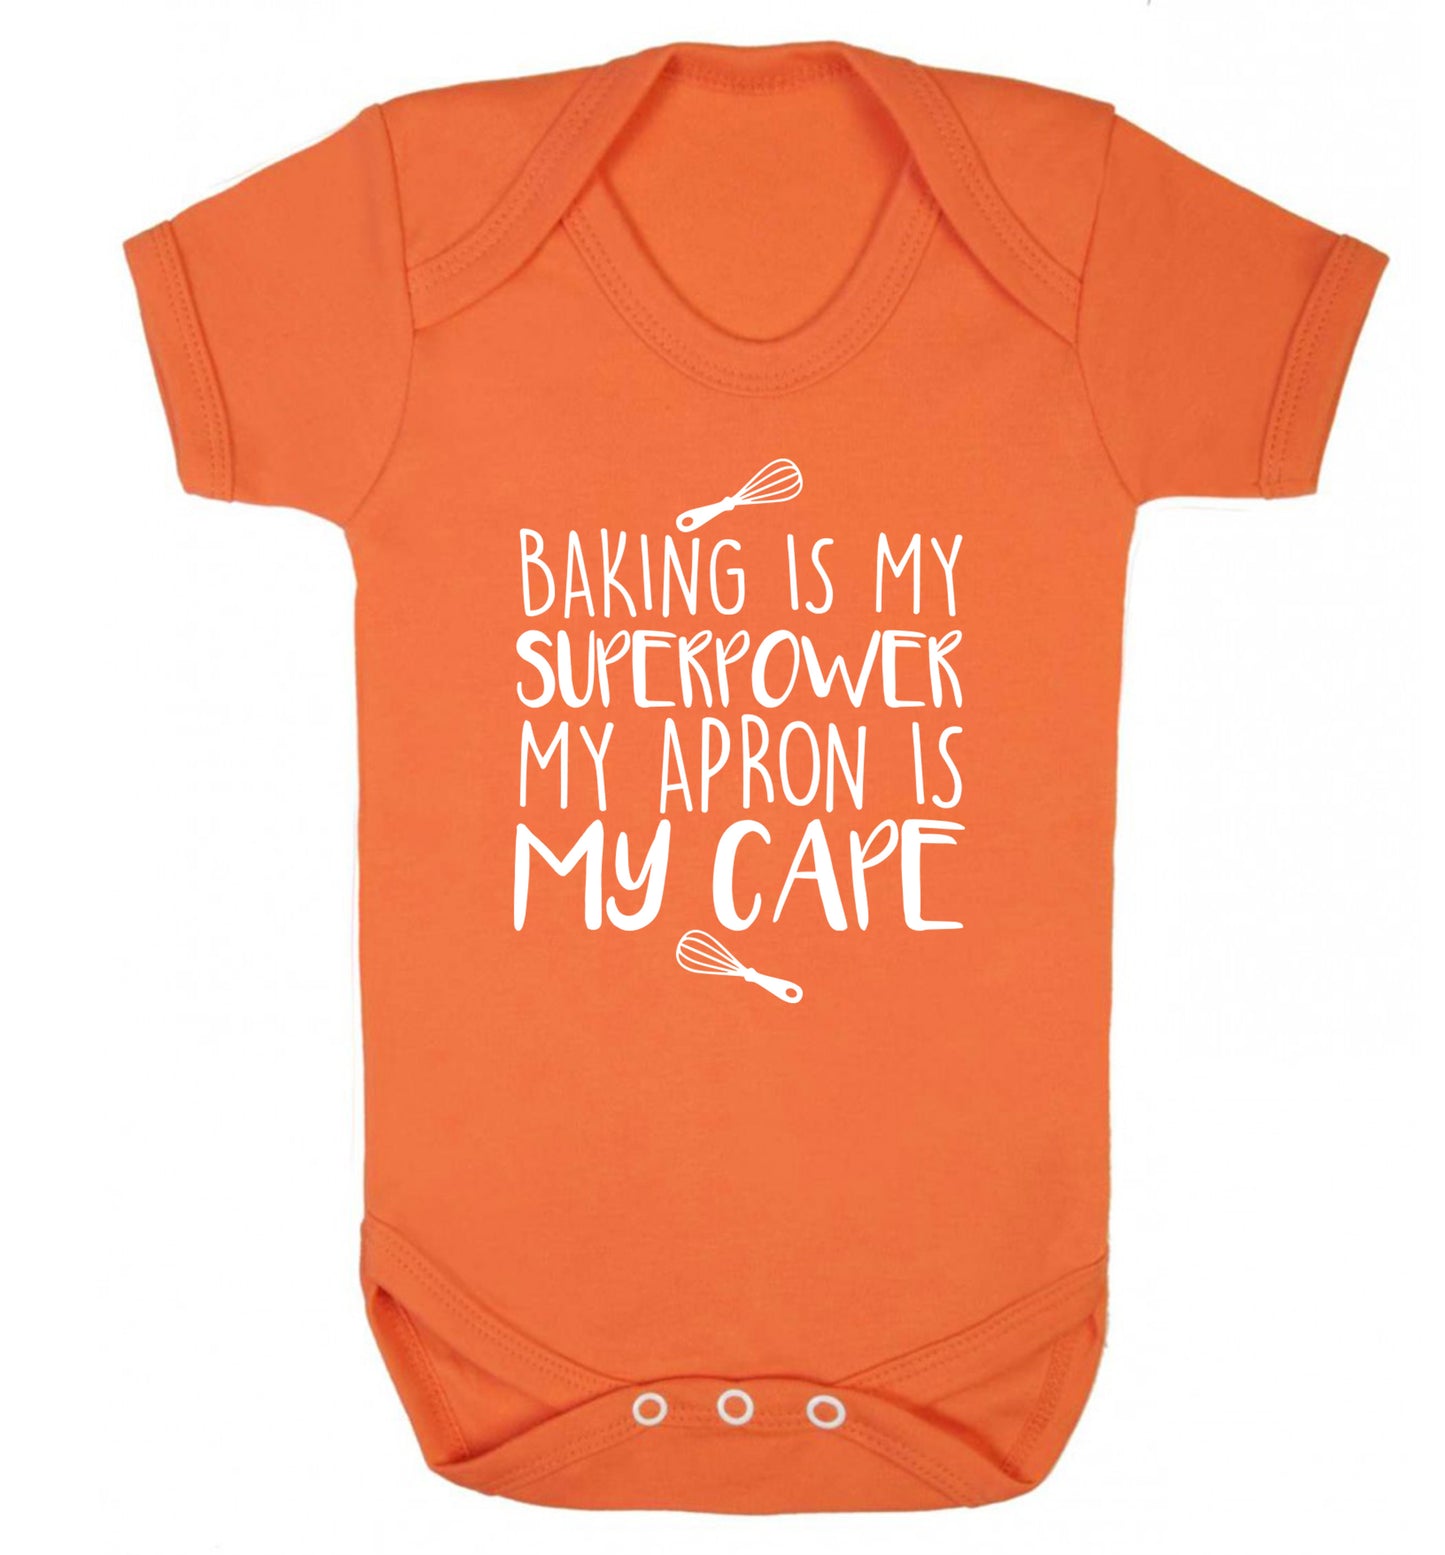 Baking is my superpower my apron is my cape Baby Vest orange 18-24 months